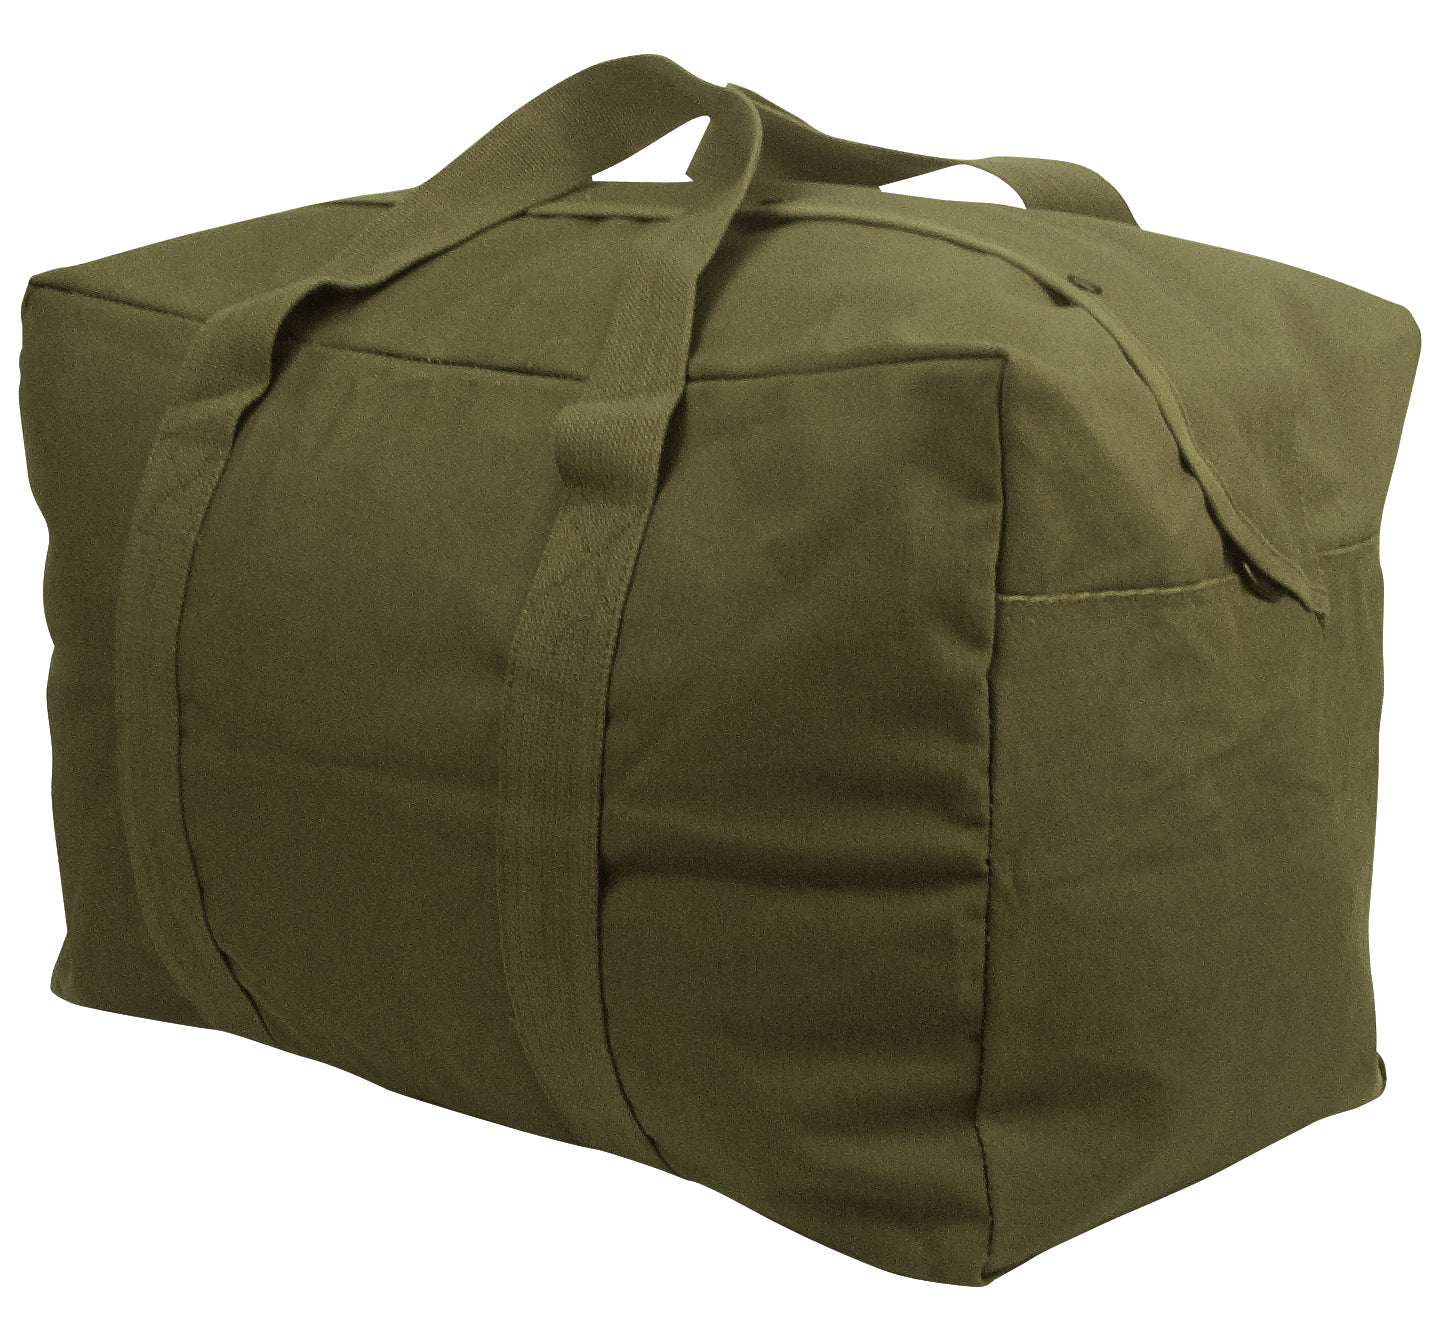 Rothco Canvas Parachute Cargo Bag Olive Drab (3123)